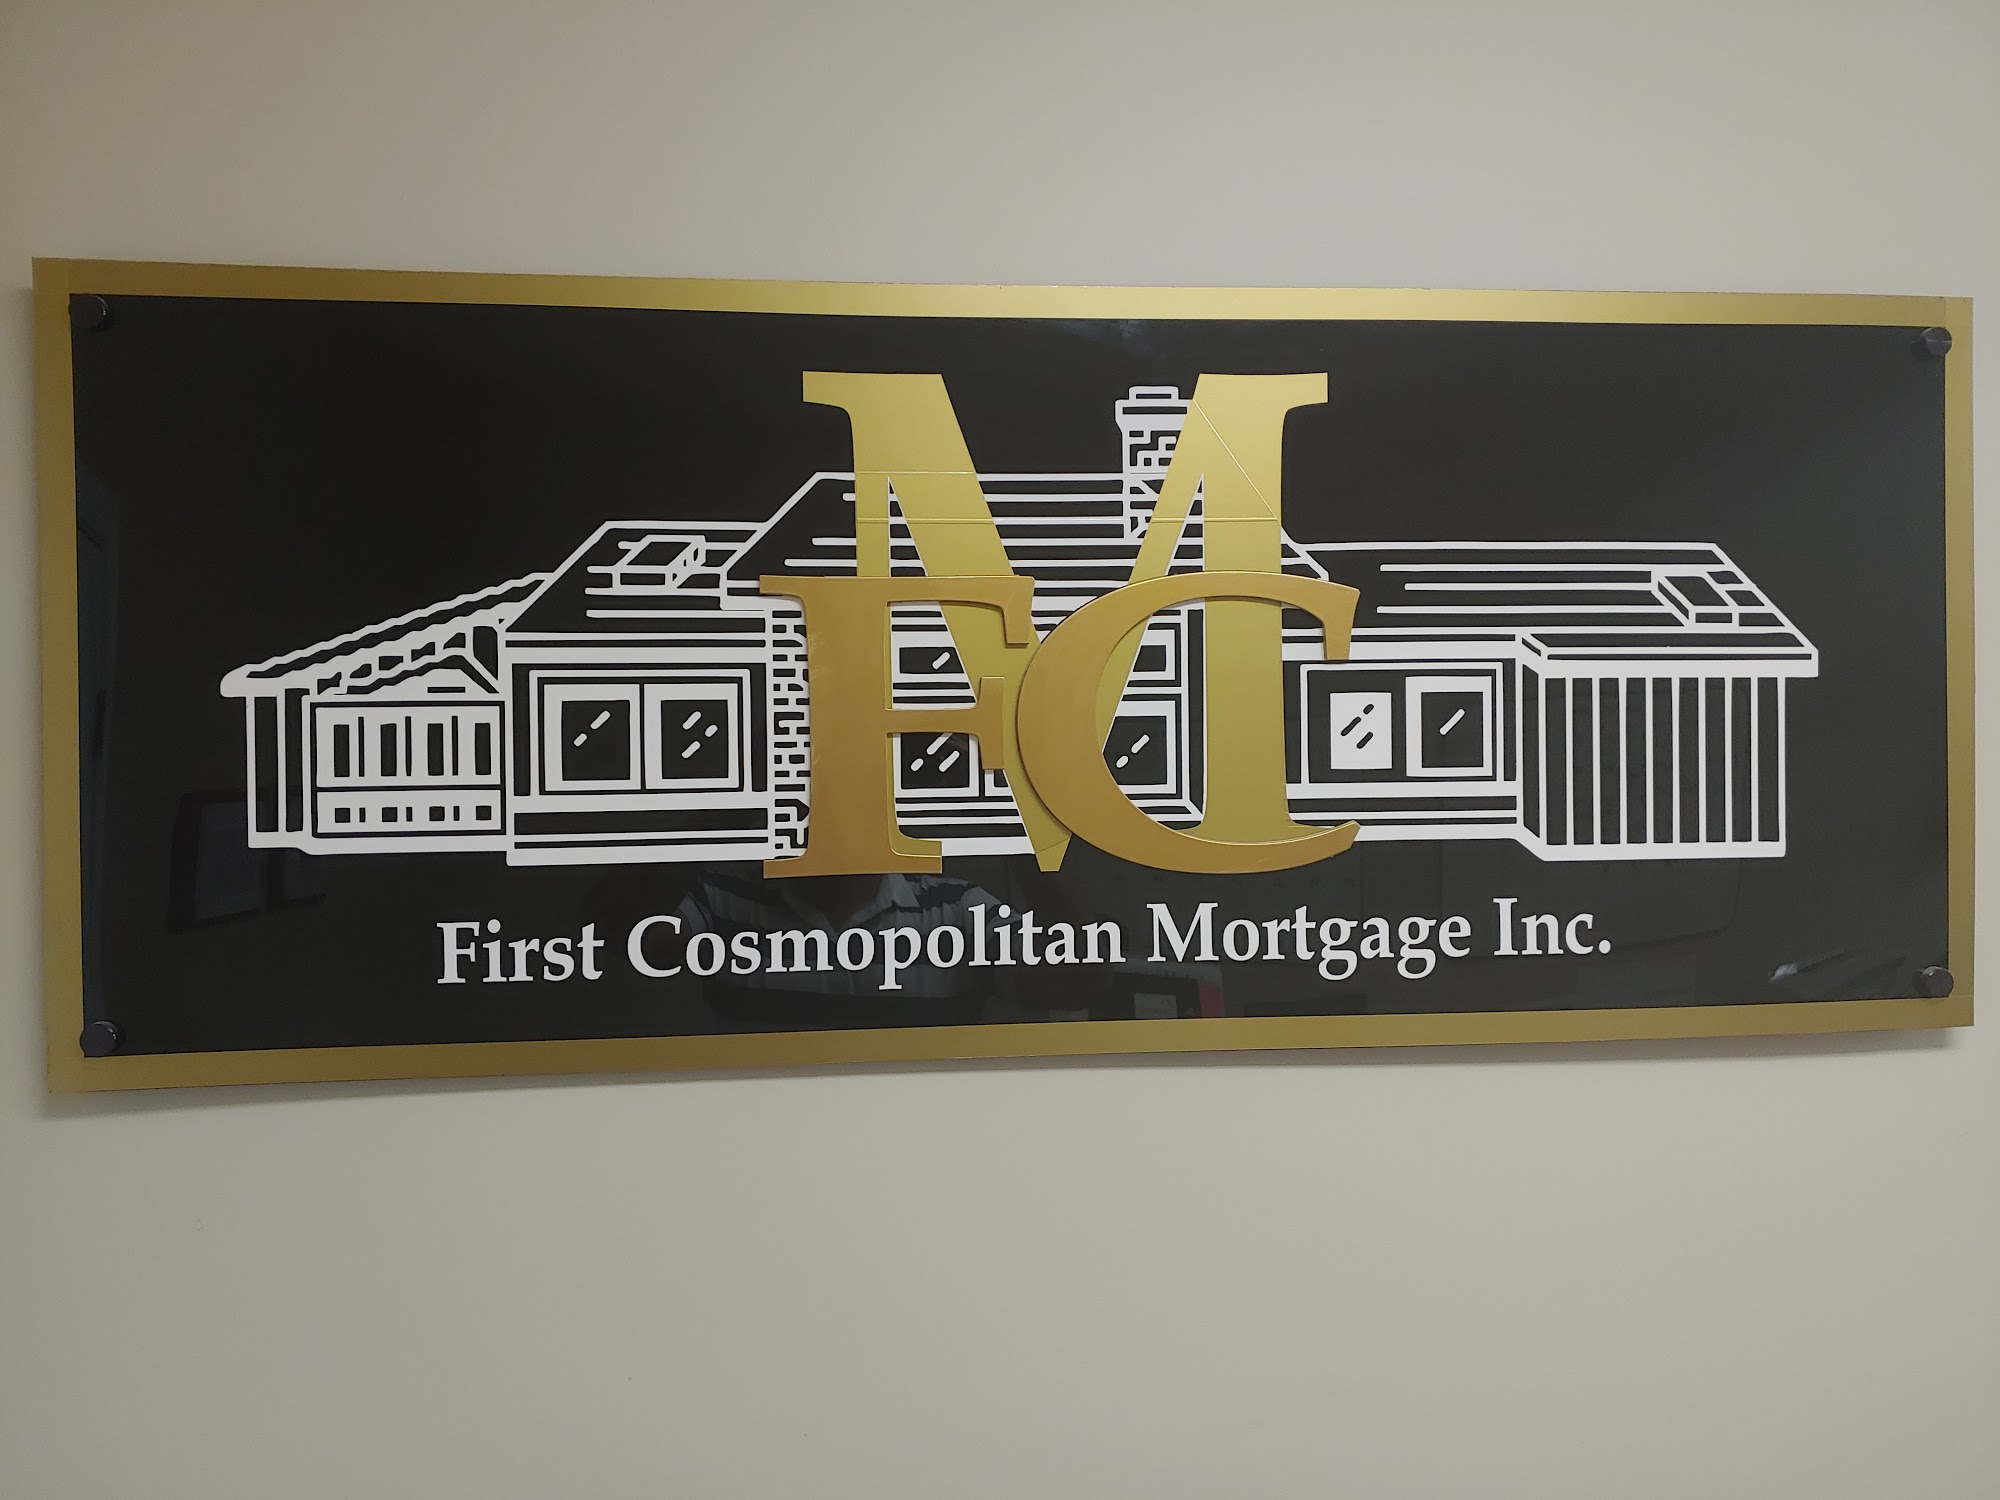 First Cosmopolitan Mortgage Inc.